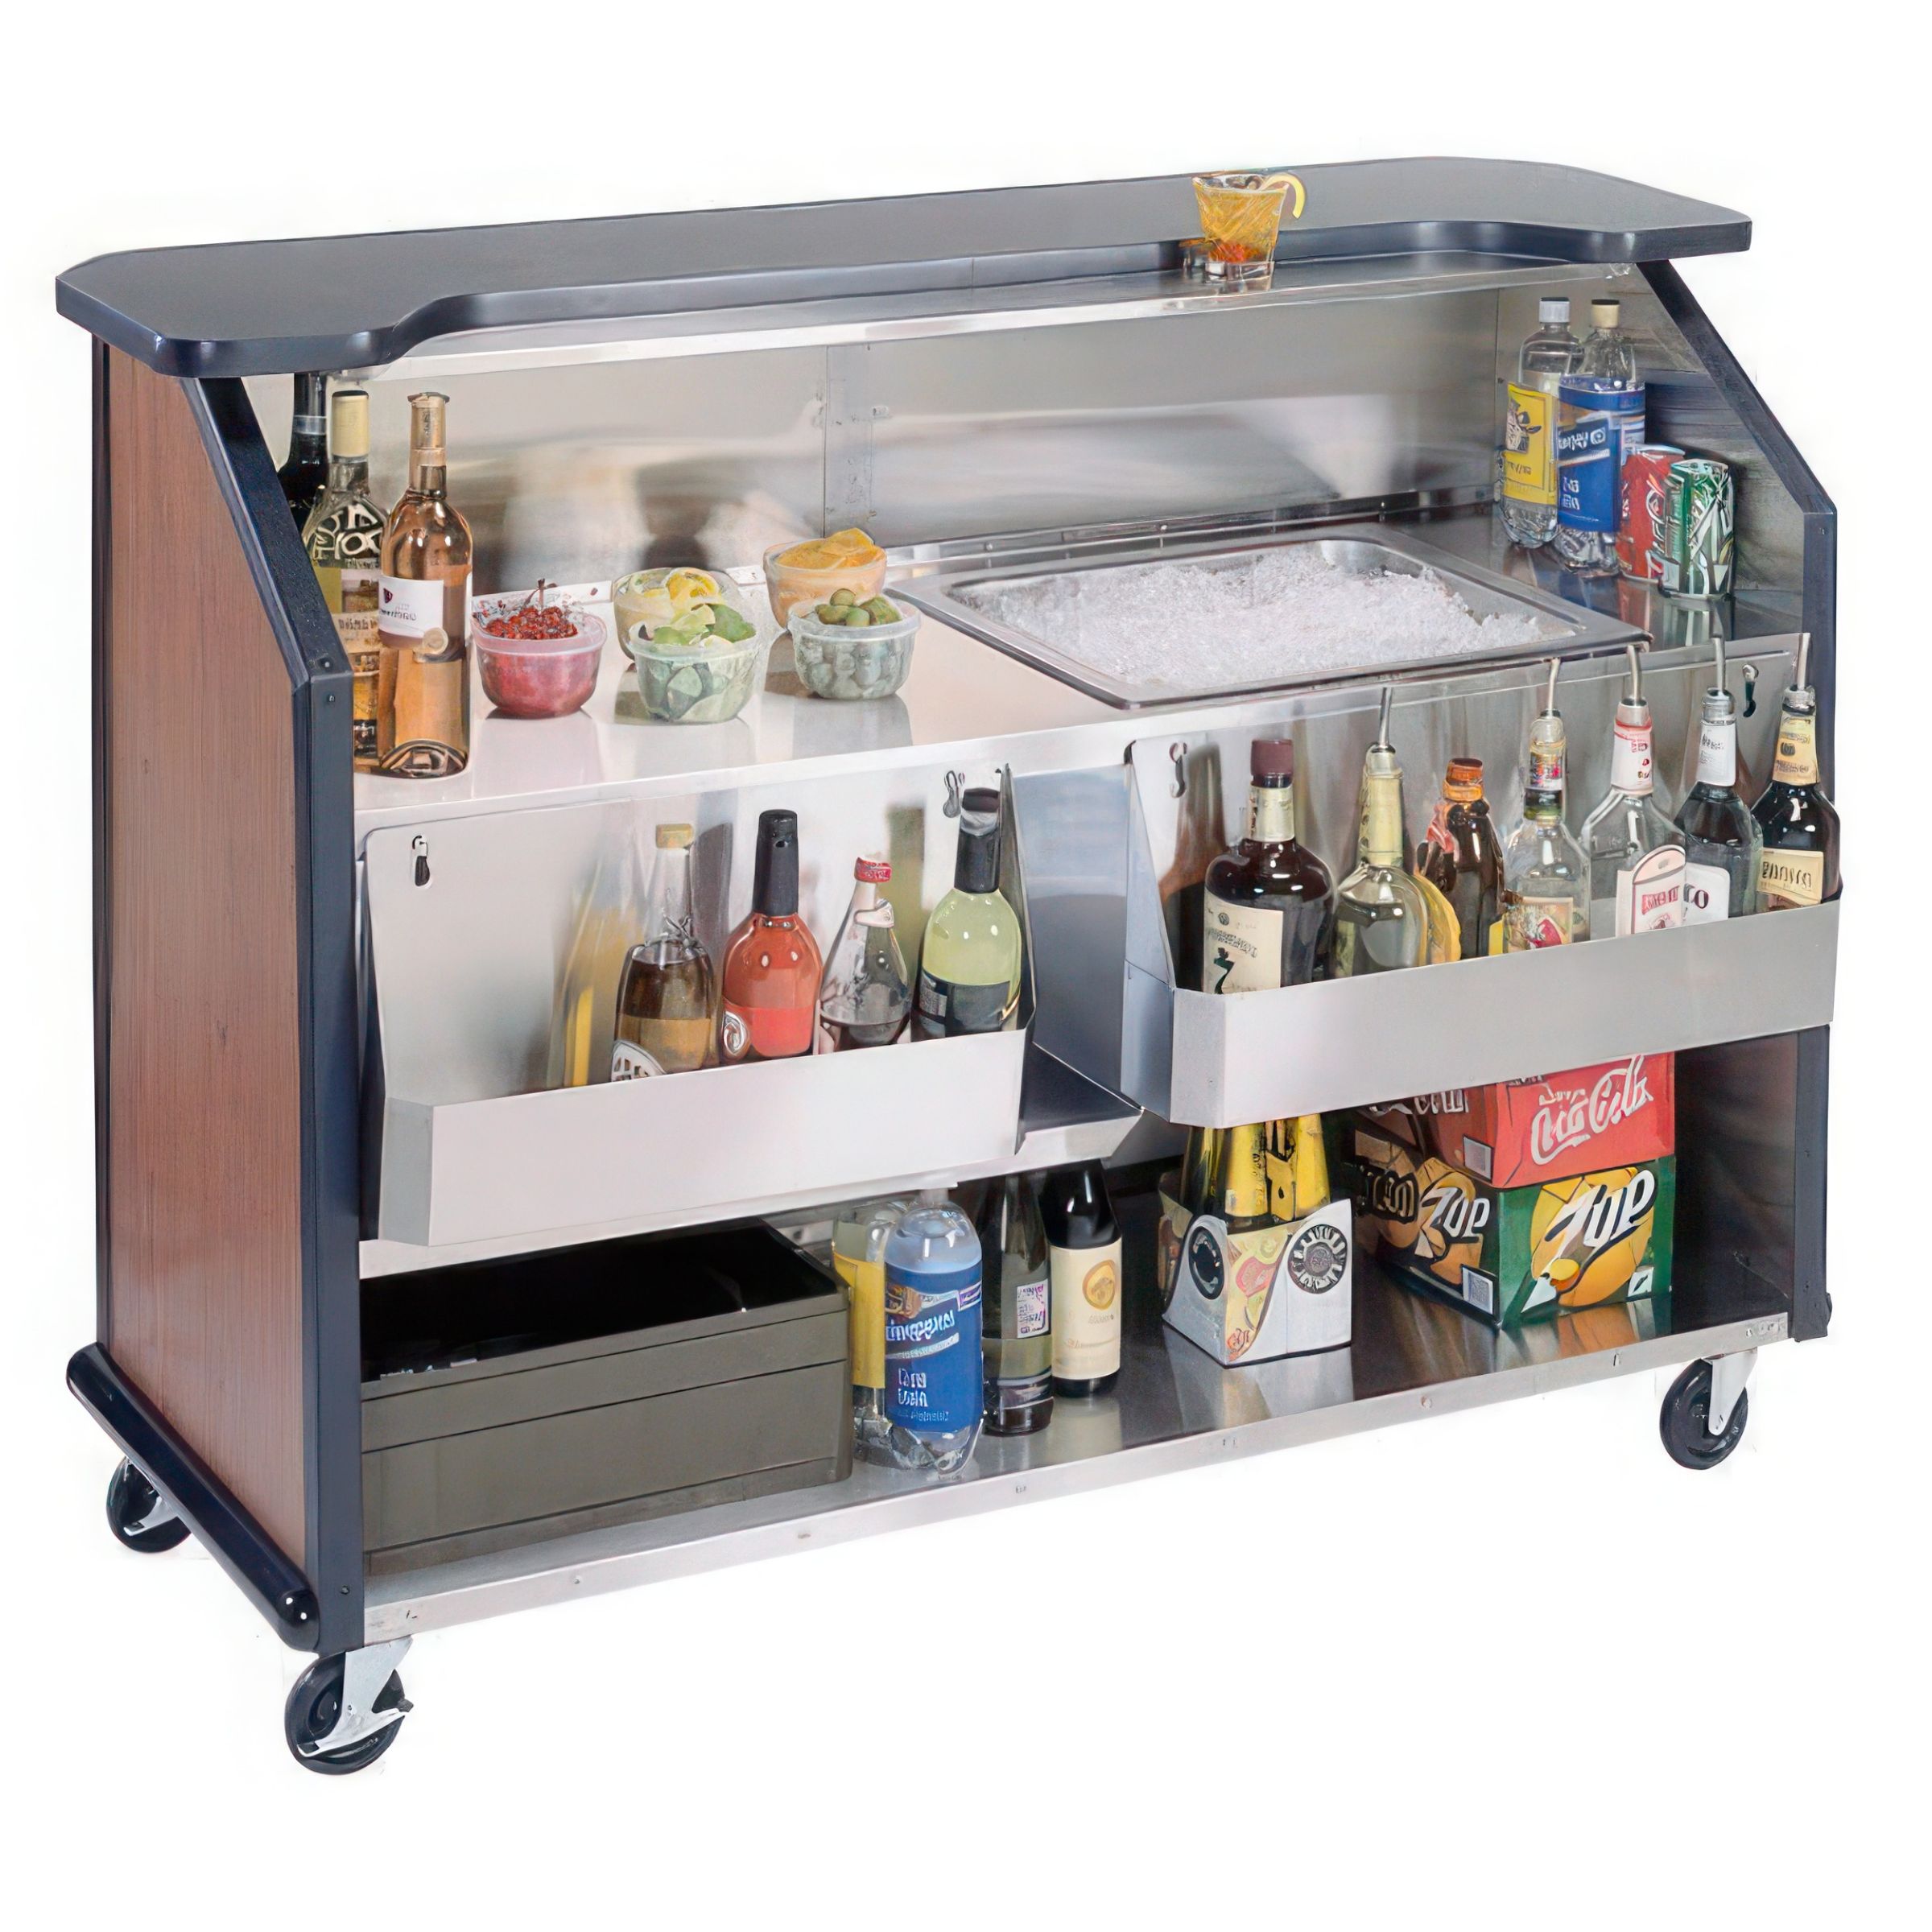 Lakeside 887 Portable Beverage Bar, NSF, 63 1/2-in. Top Shelf, (1